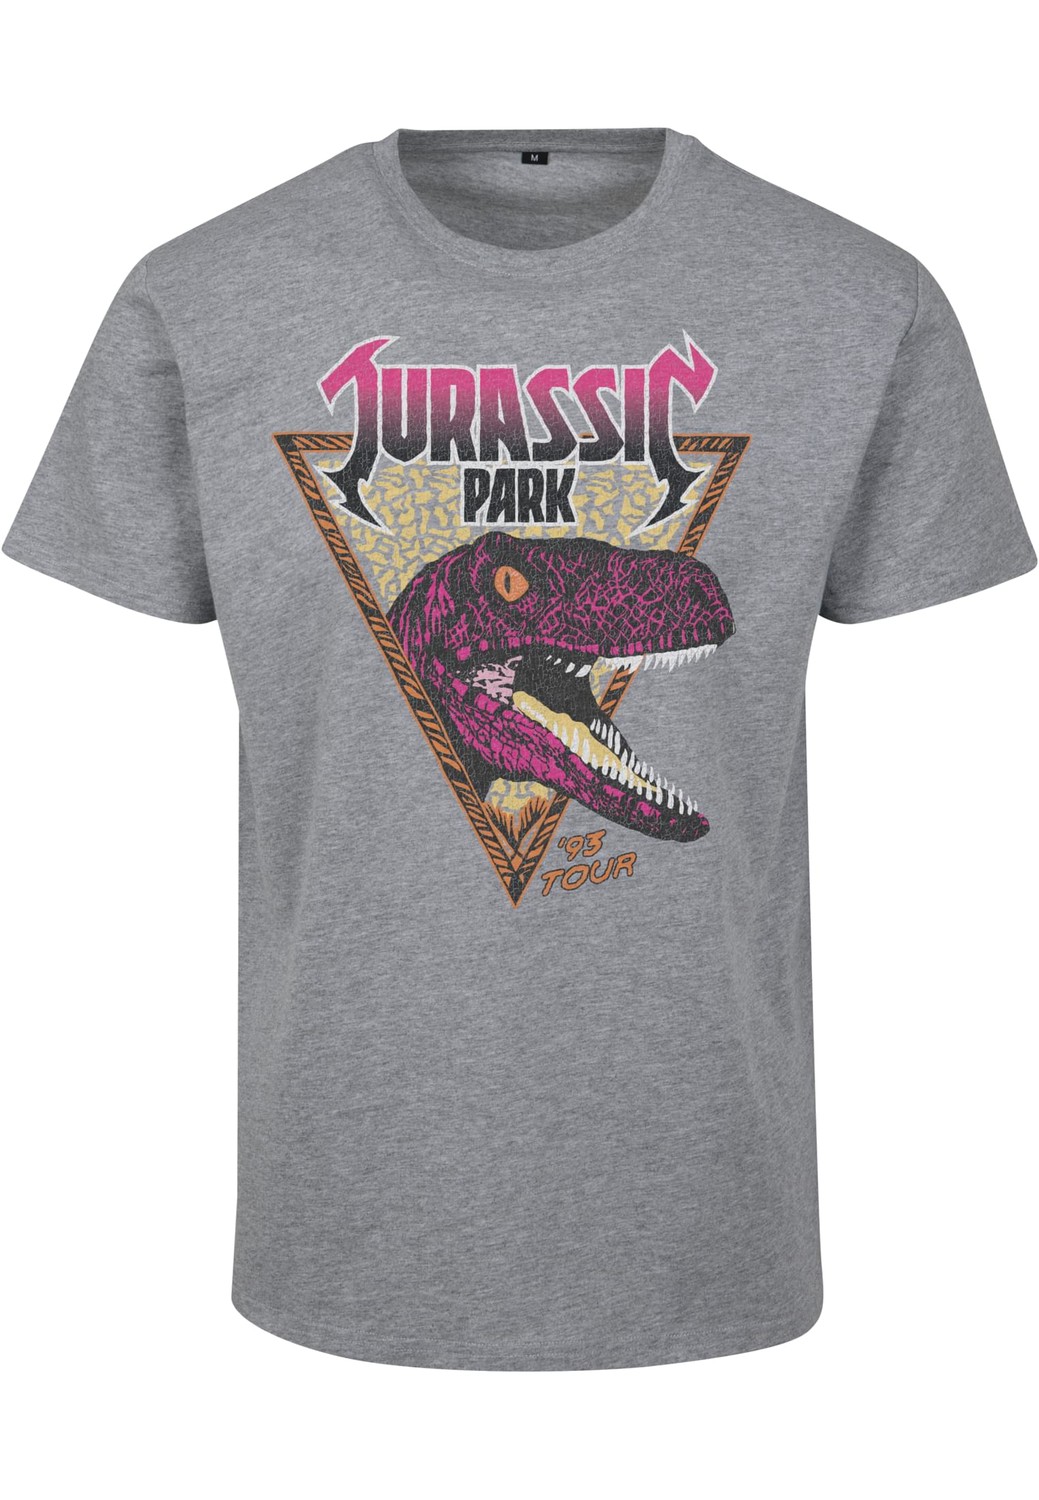 Jurassic Park Pink Rock Tee heather gray